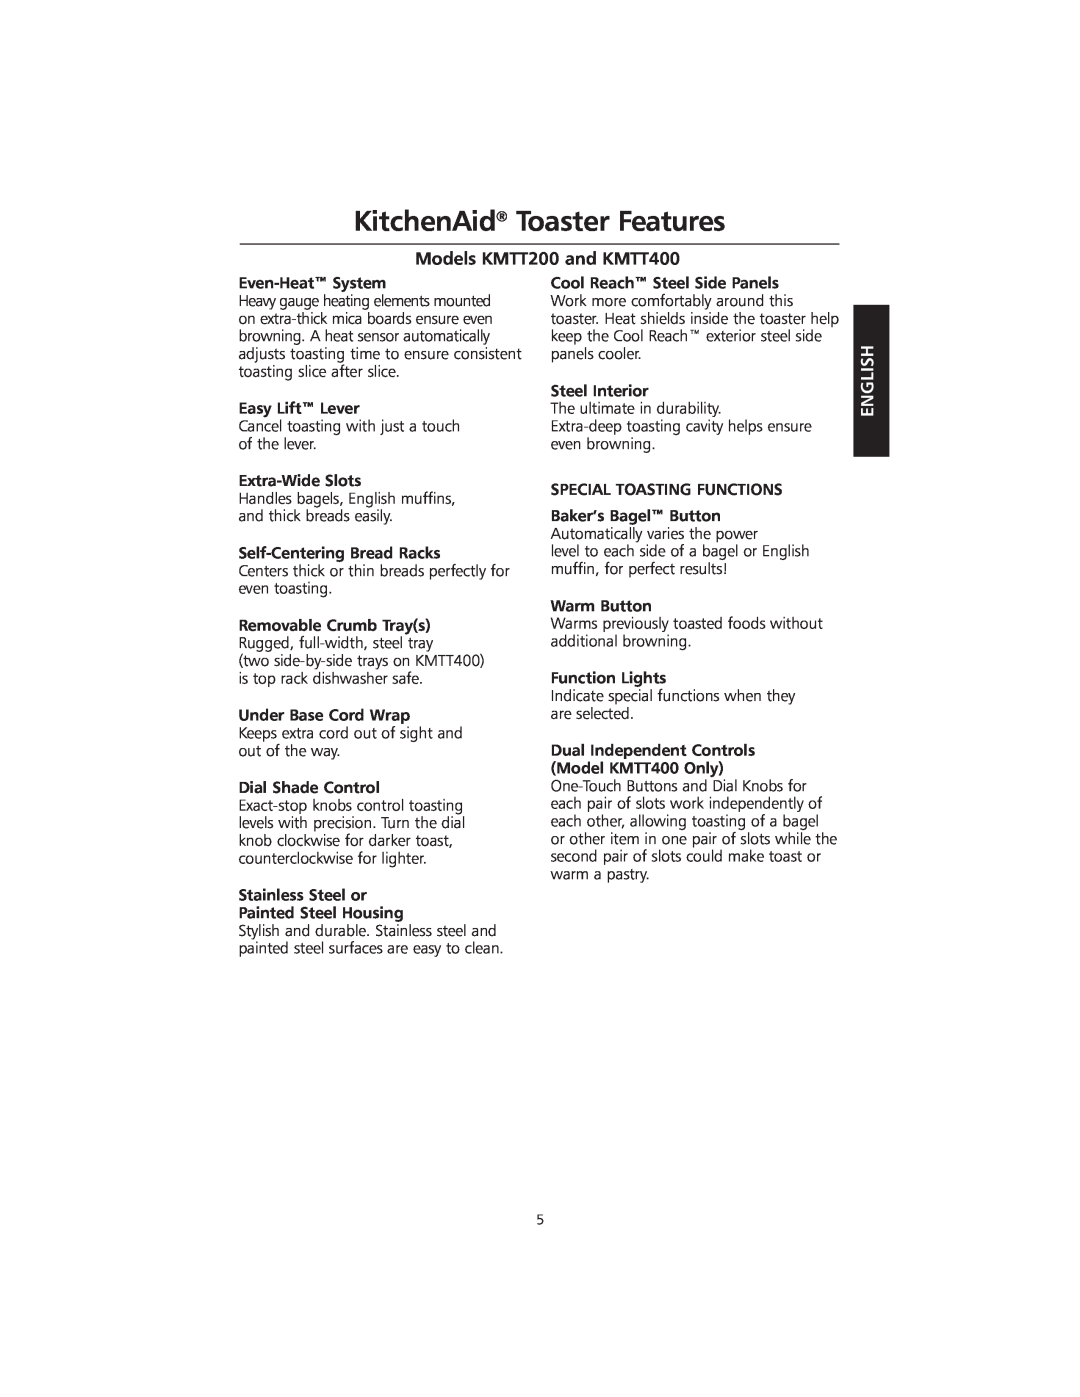 KitchenAid manual KitchenAid Toaster Features, Models KMTT200 and KMTT400, English, Even-HeatSystem 